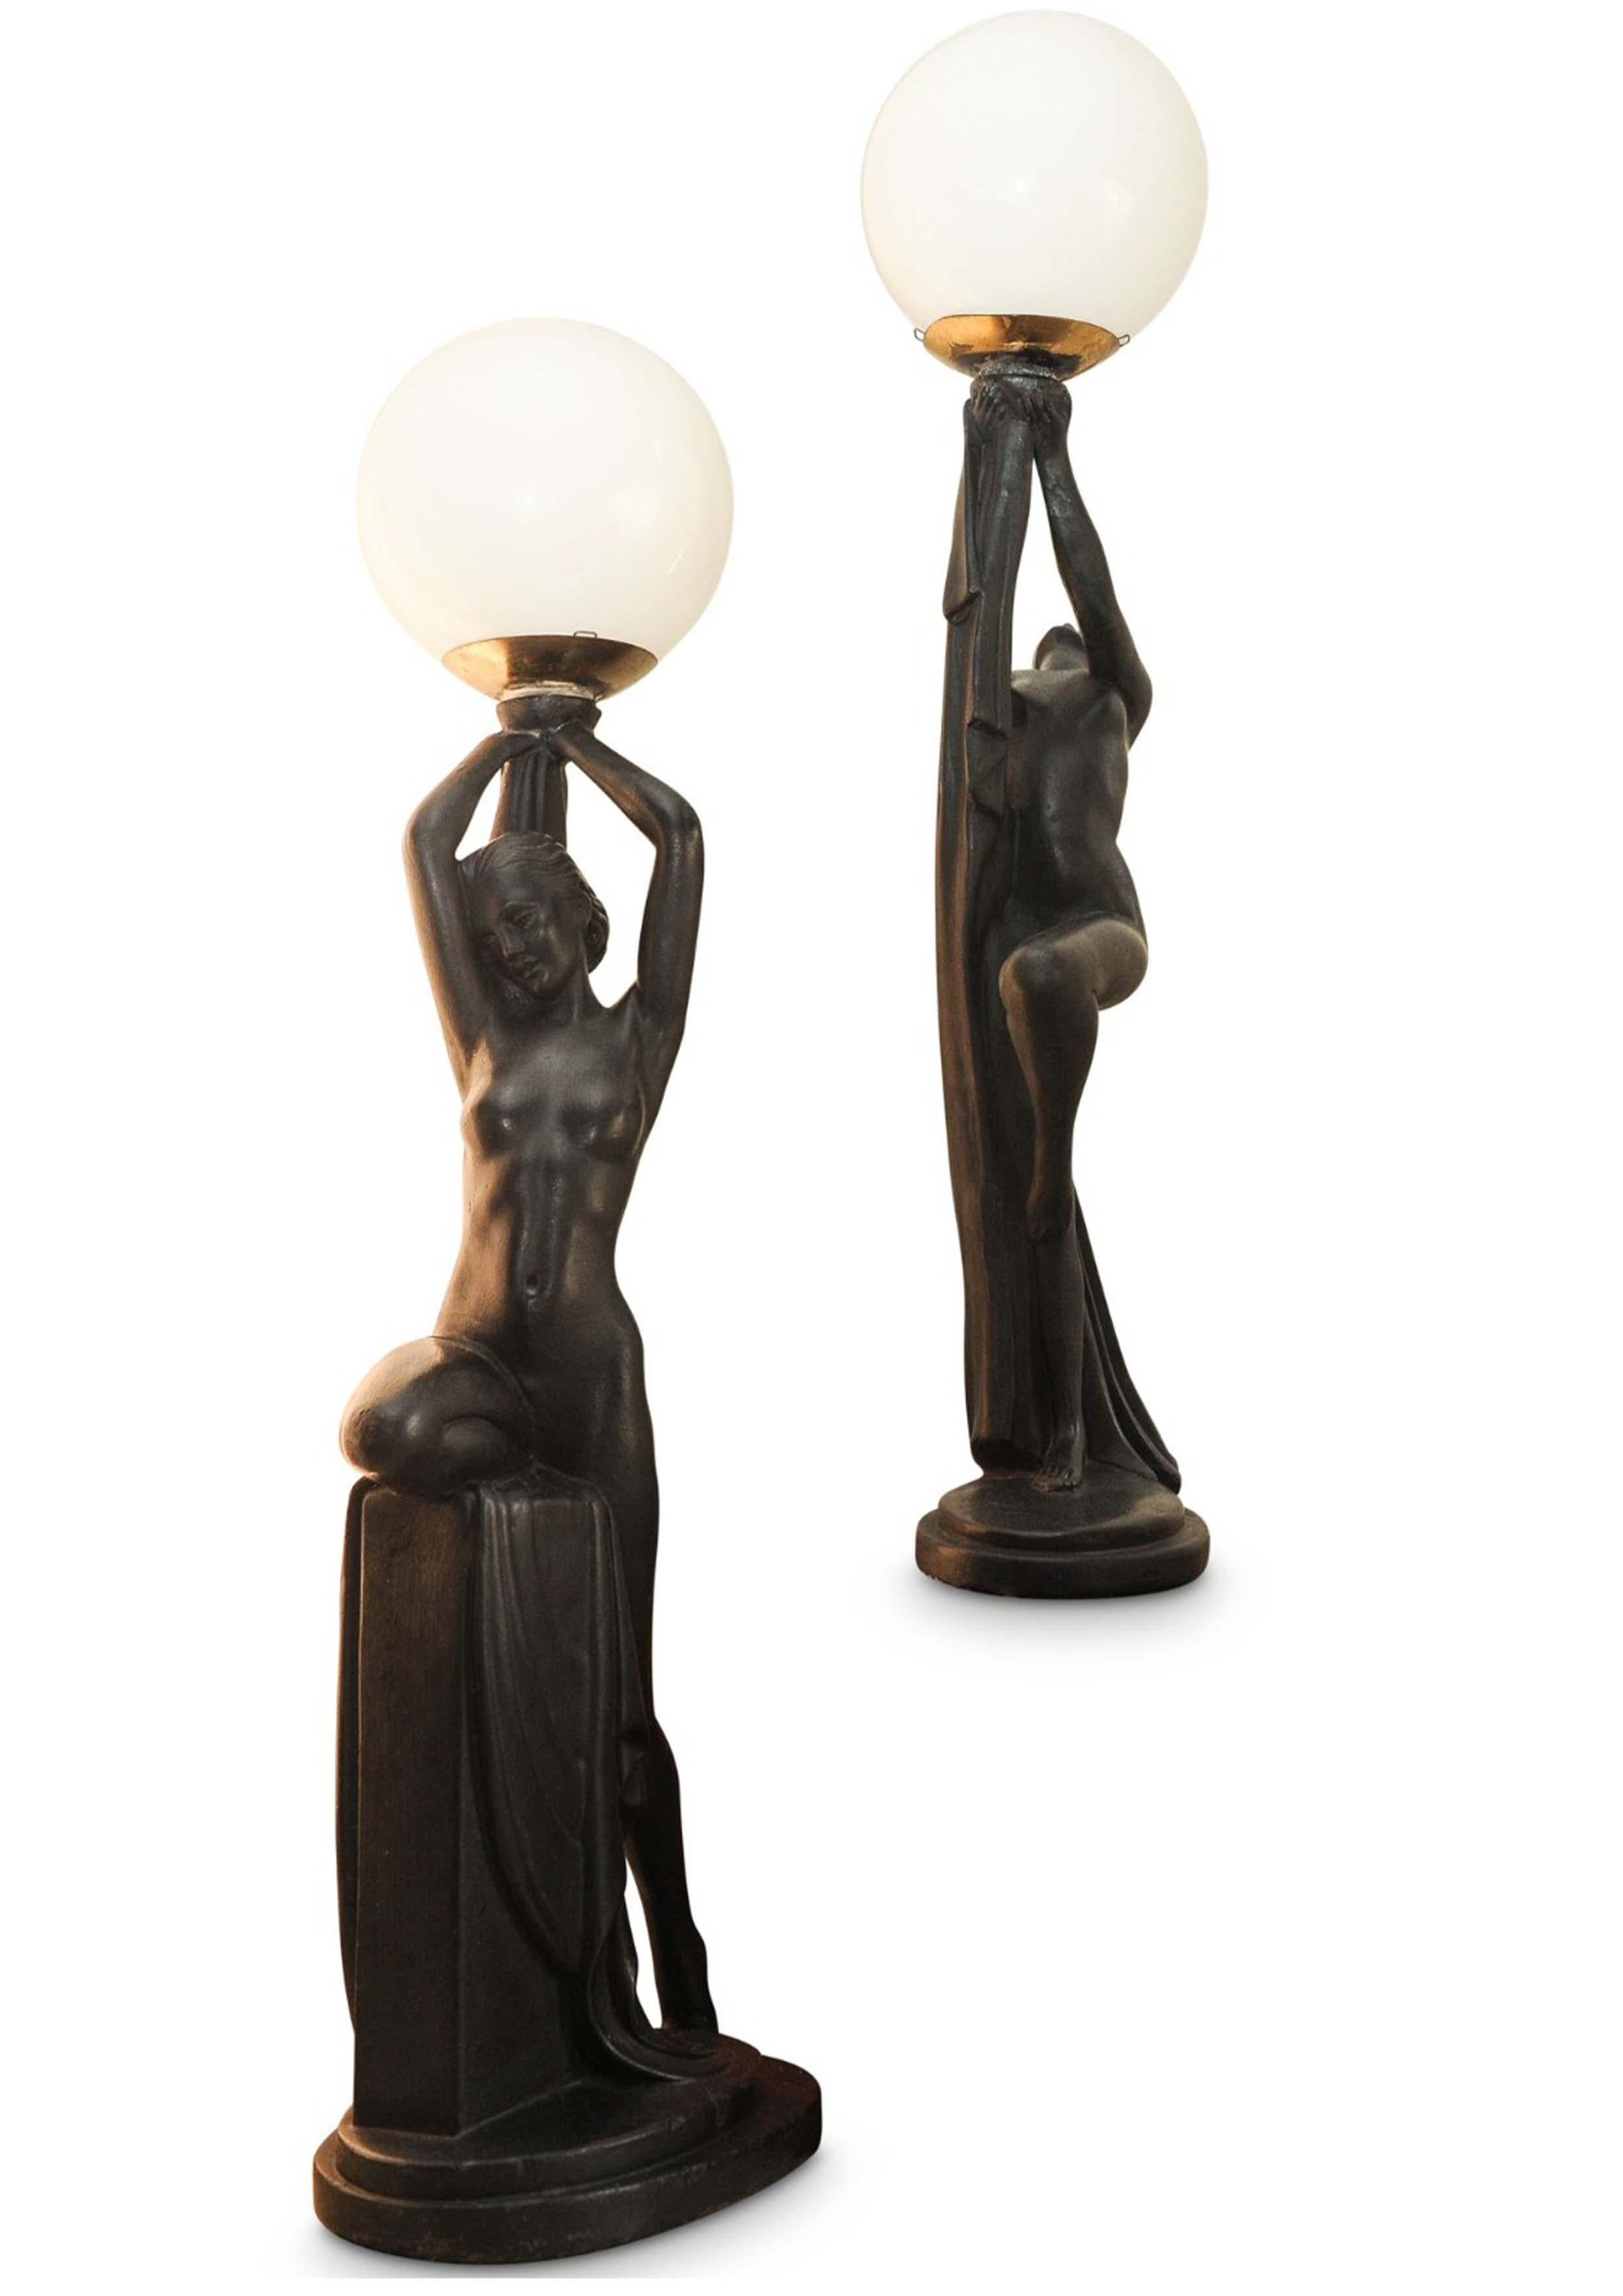 Pair of Exquisite Large Art Deco ebonized Plaster Nude Feminine Form Table Lamps 1930s.